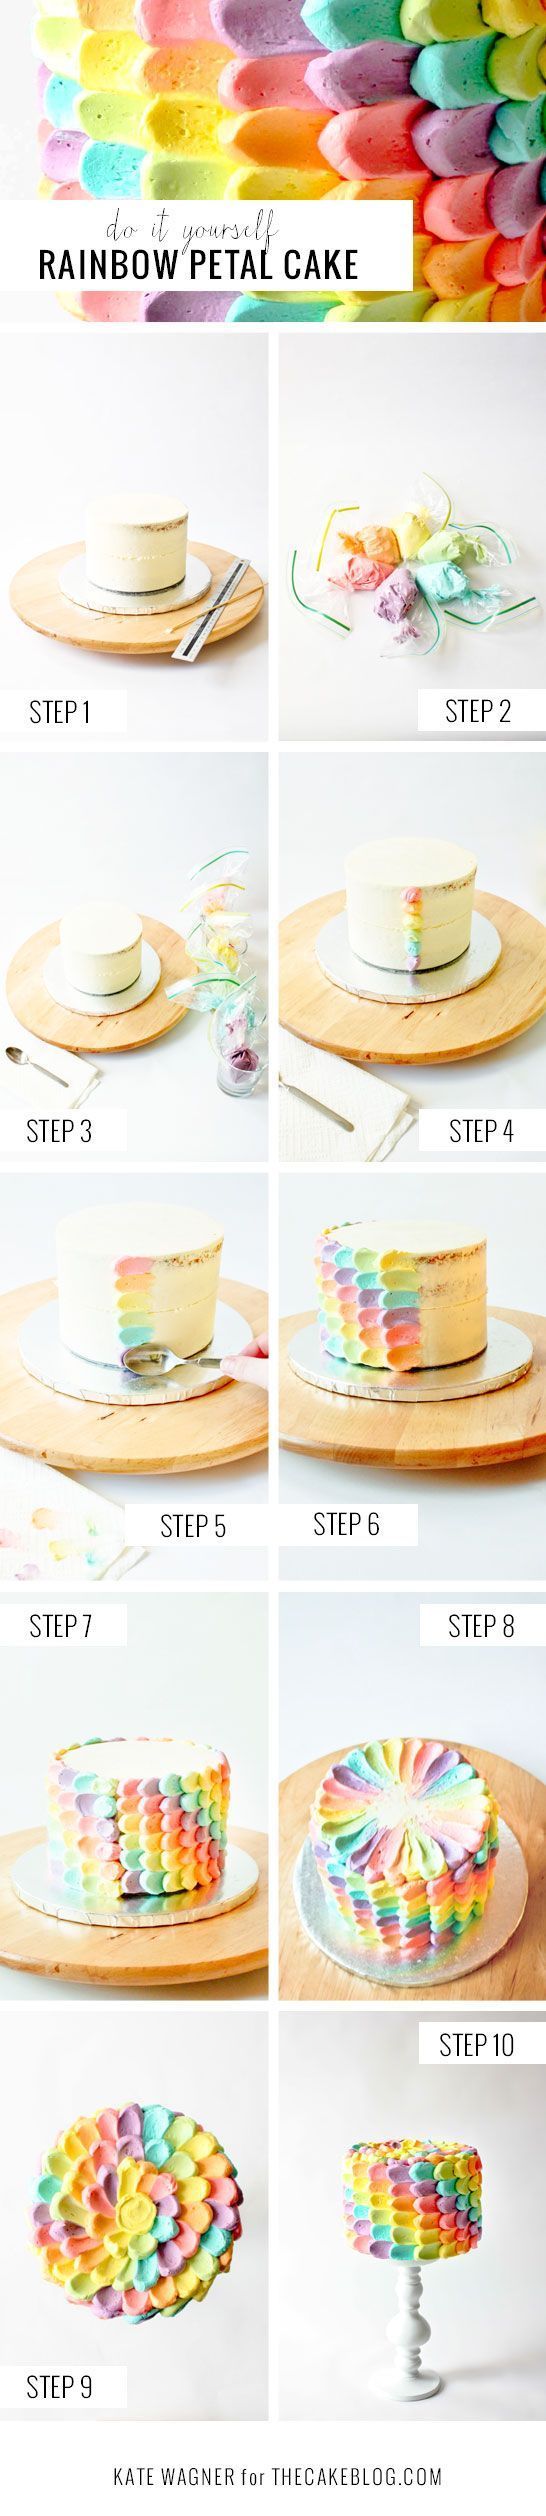 DIY Rainbow Petal Cake